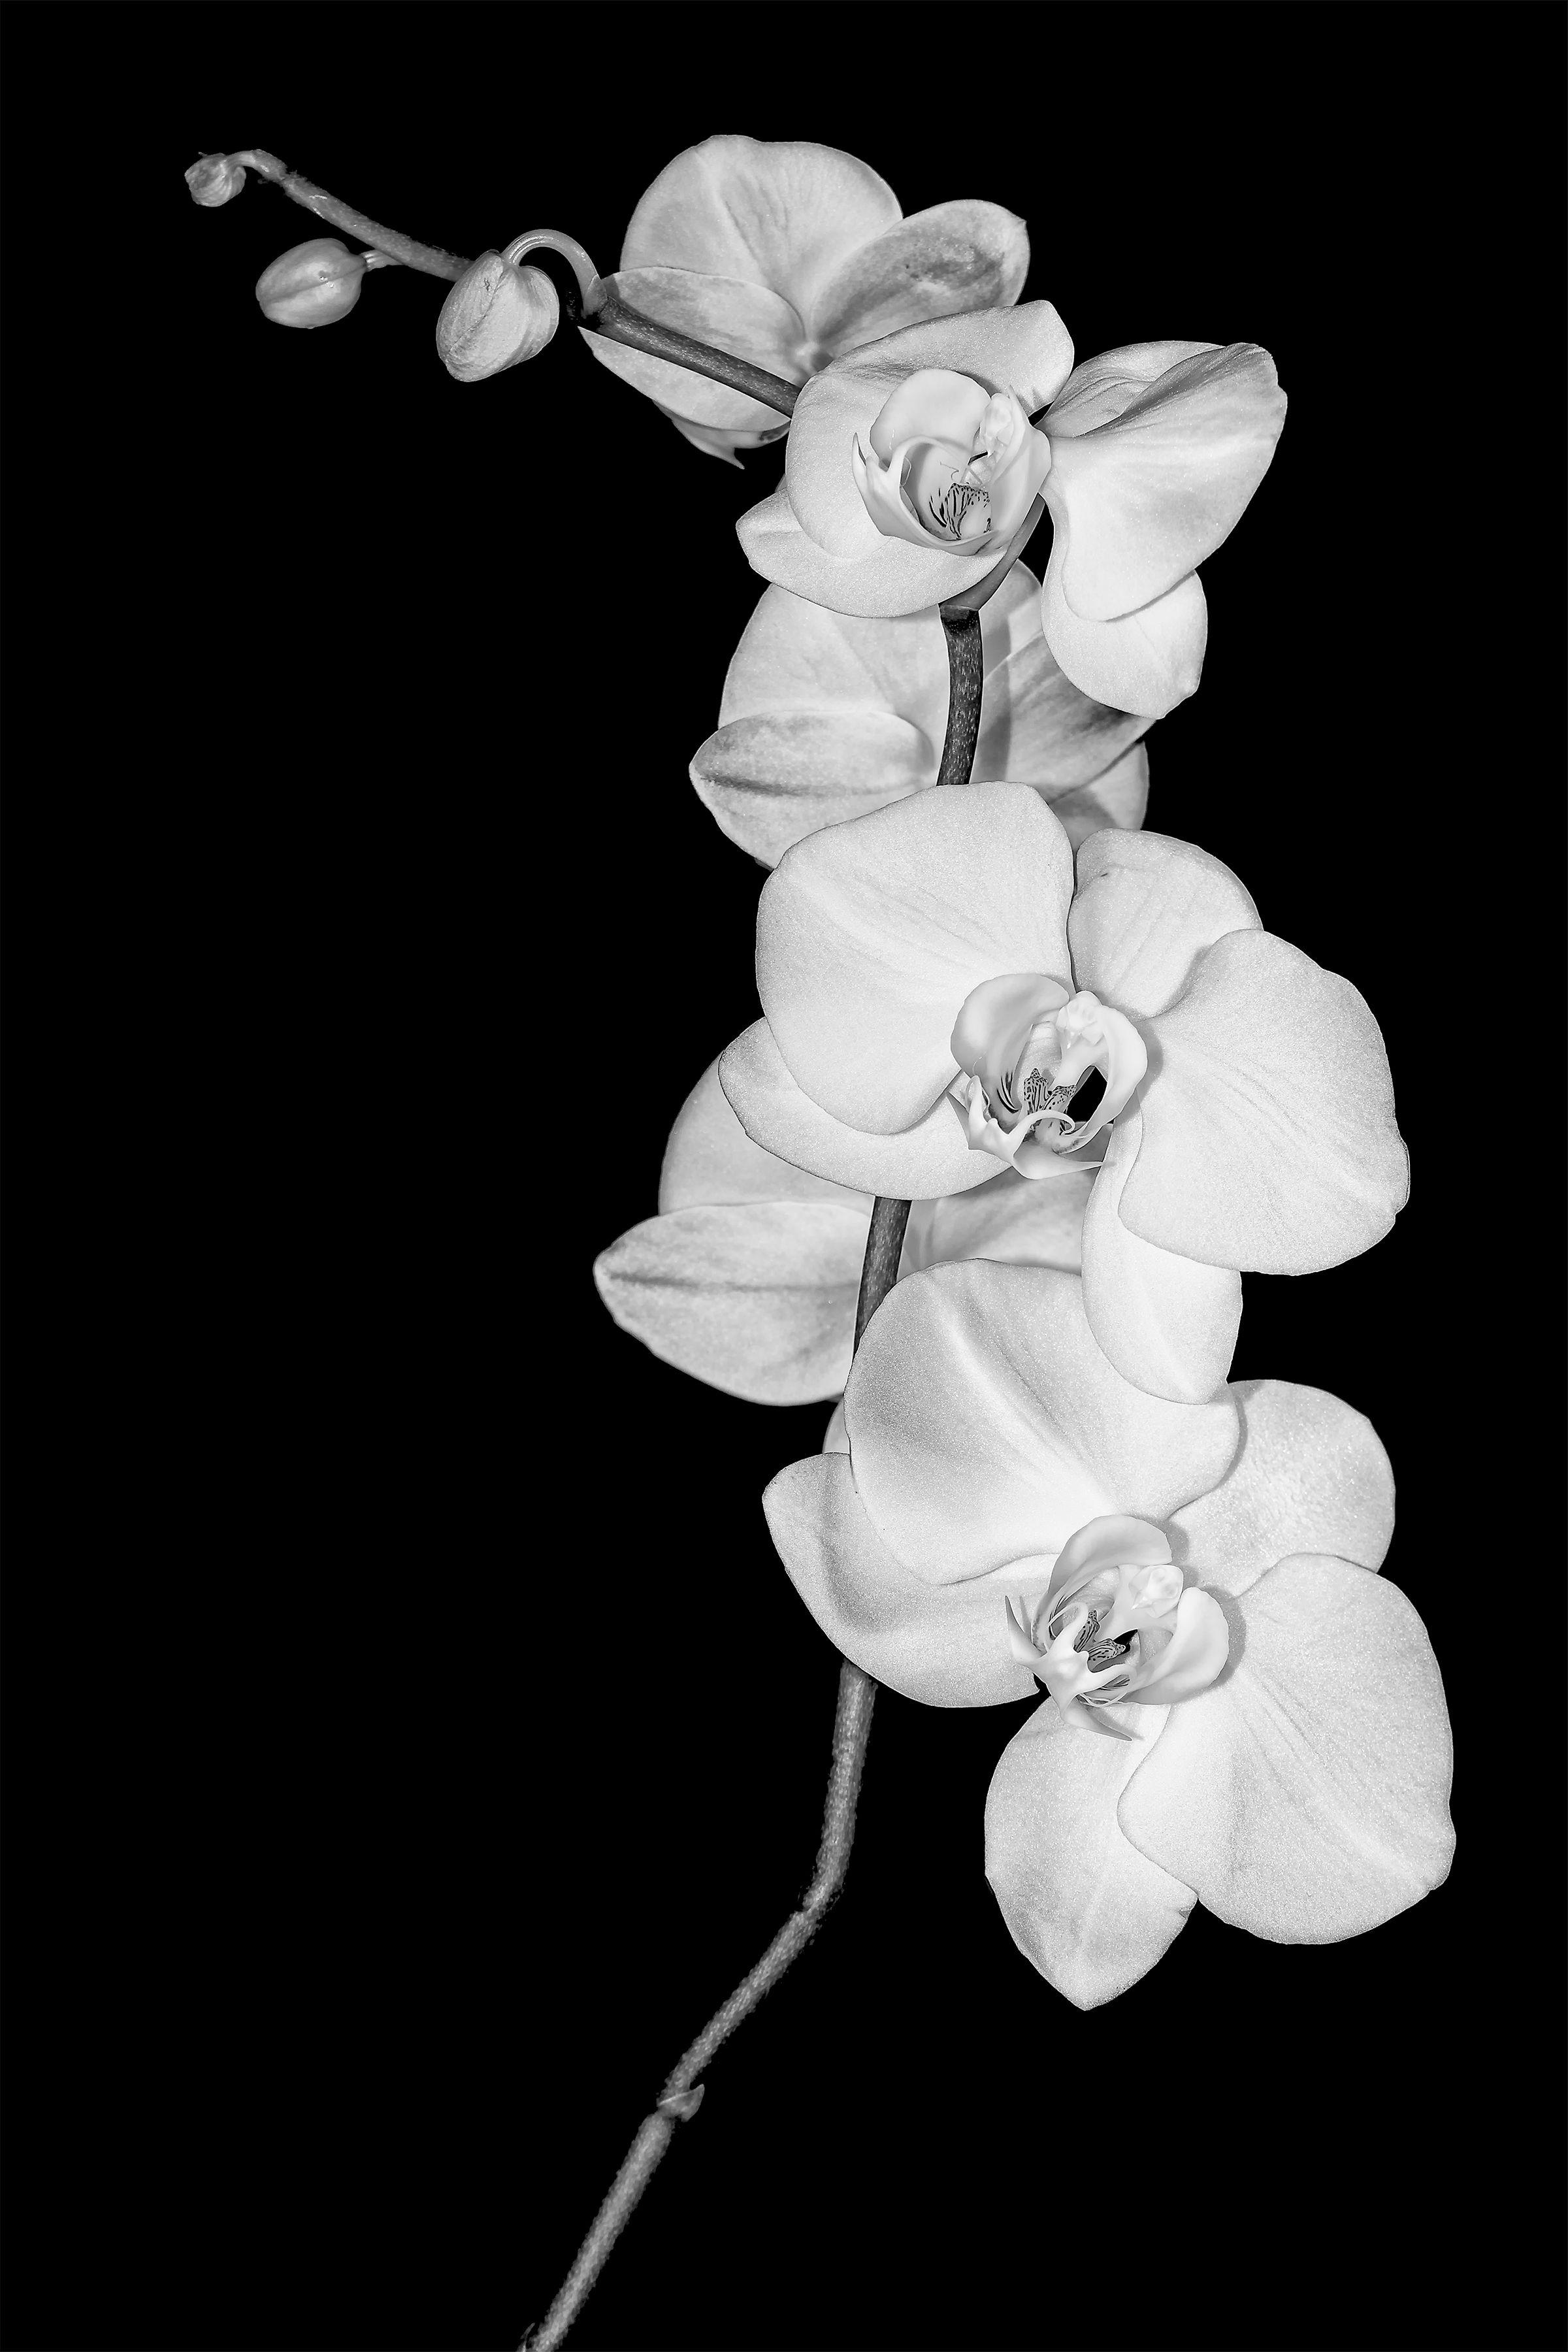 Daniel Ashe Black and White Photograph – Orchidee-Studie in Schwarz-Weiß, Fotografie, Archivtinte Jet